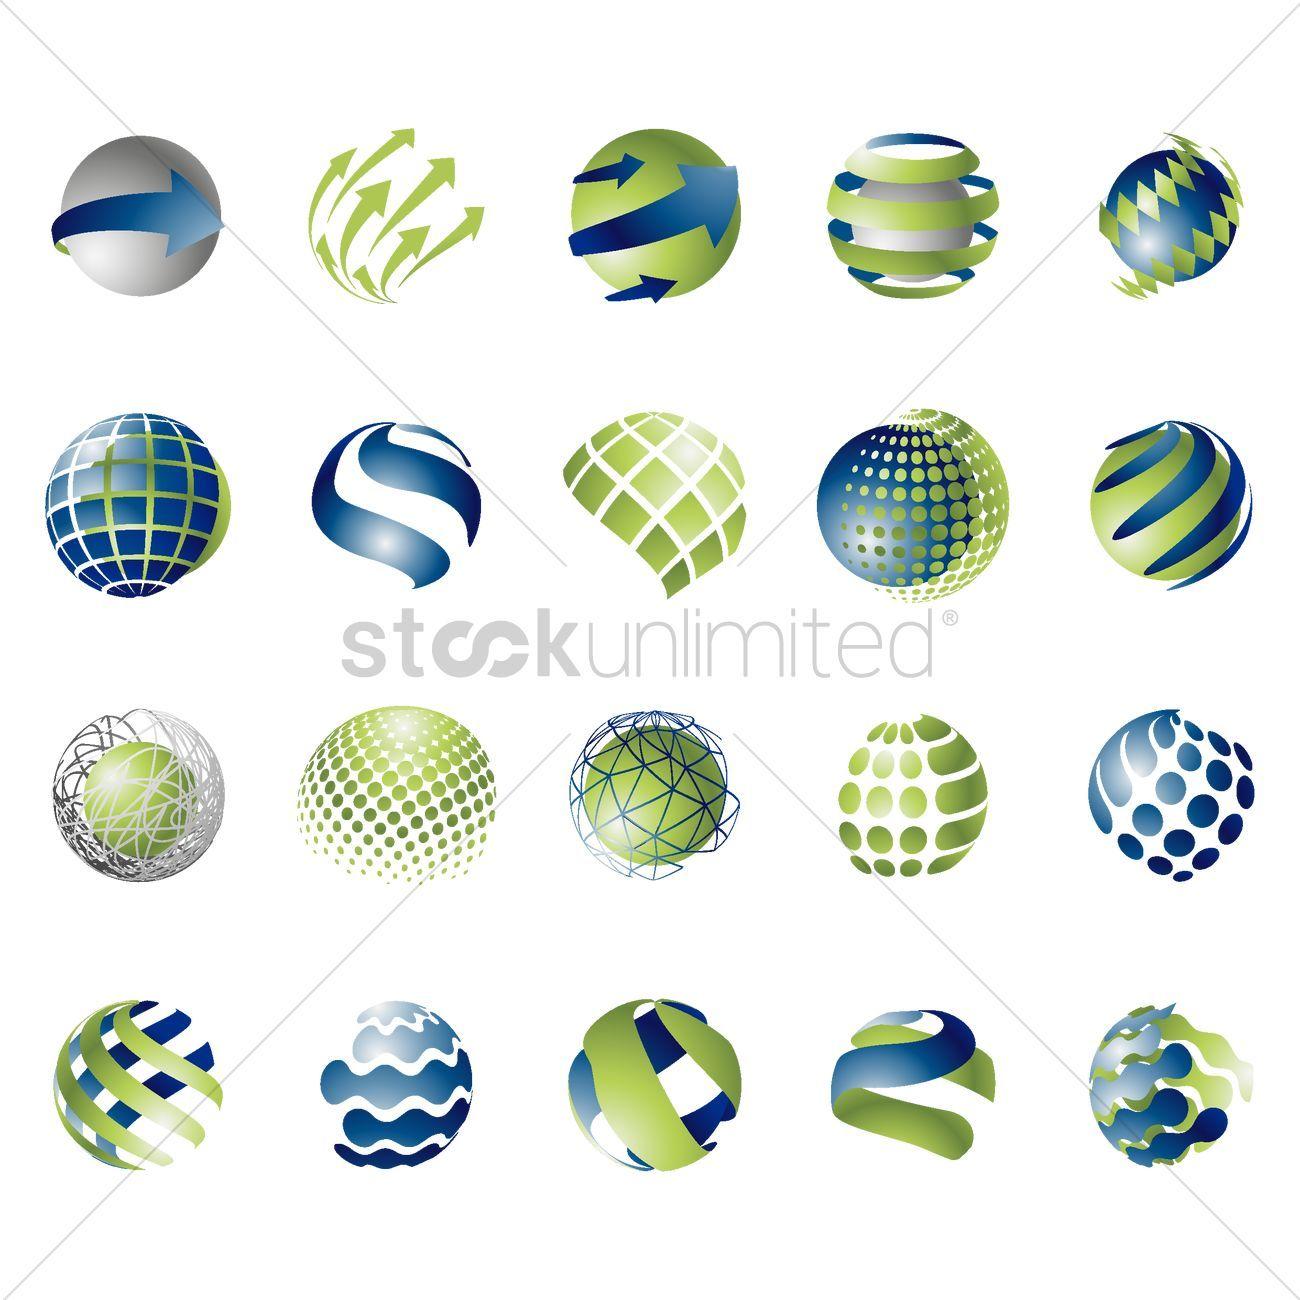 Spherical Logo - Spherical logo element design Vector Image - 2001923 | StockUnlimited